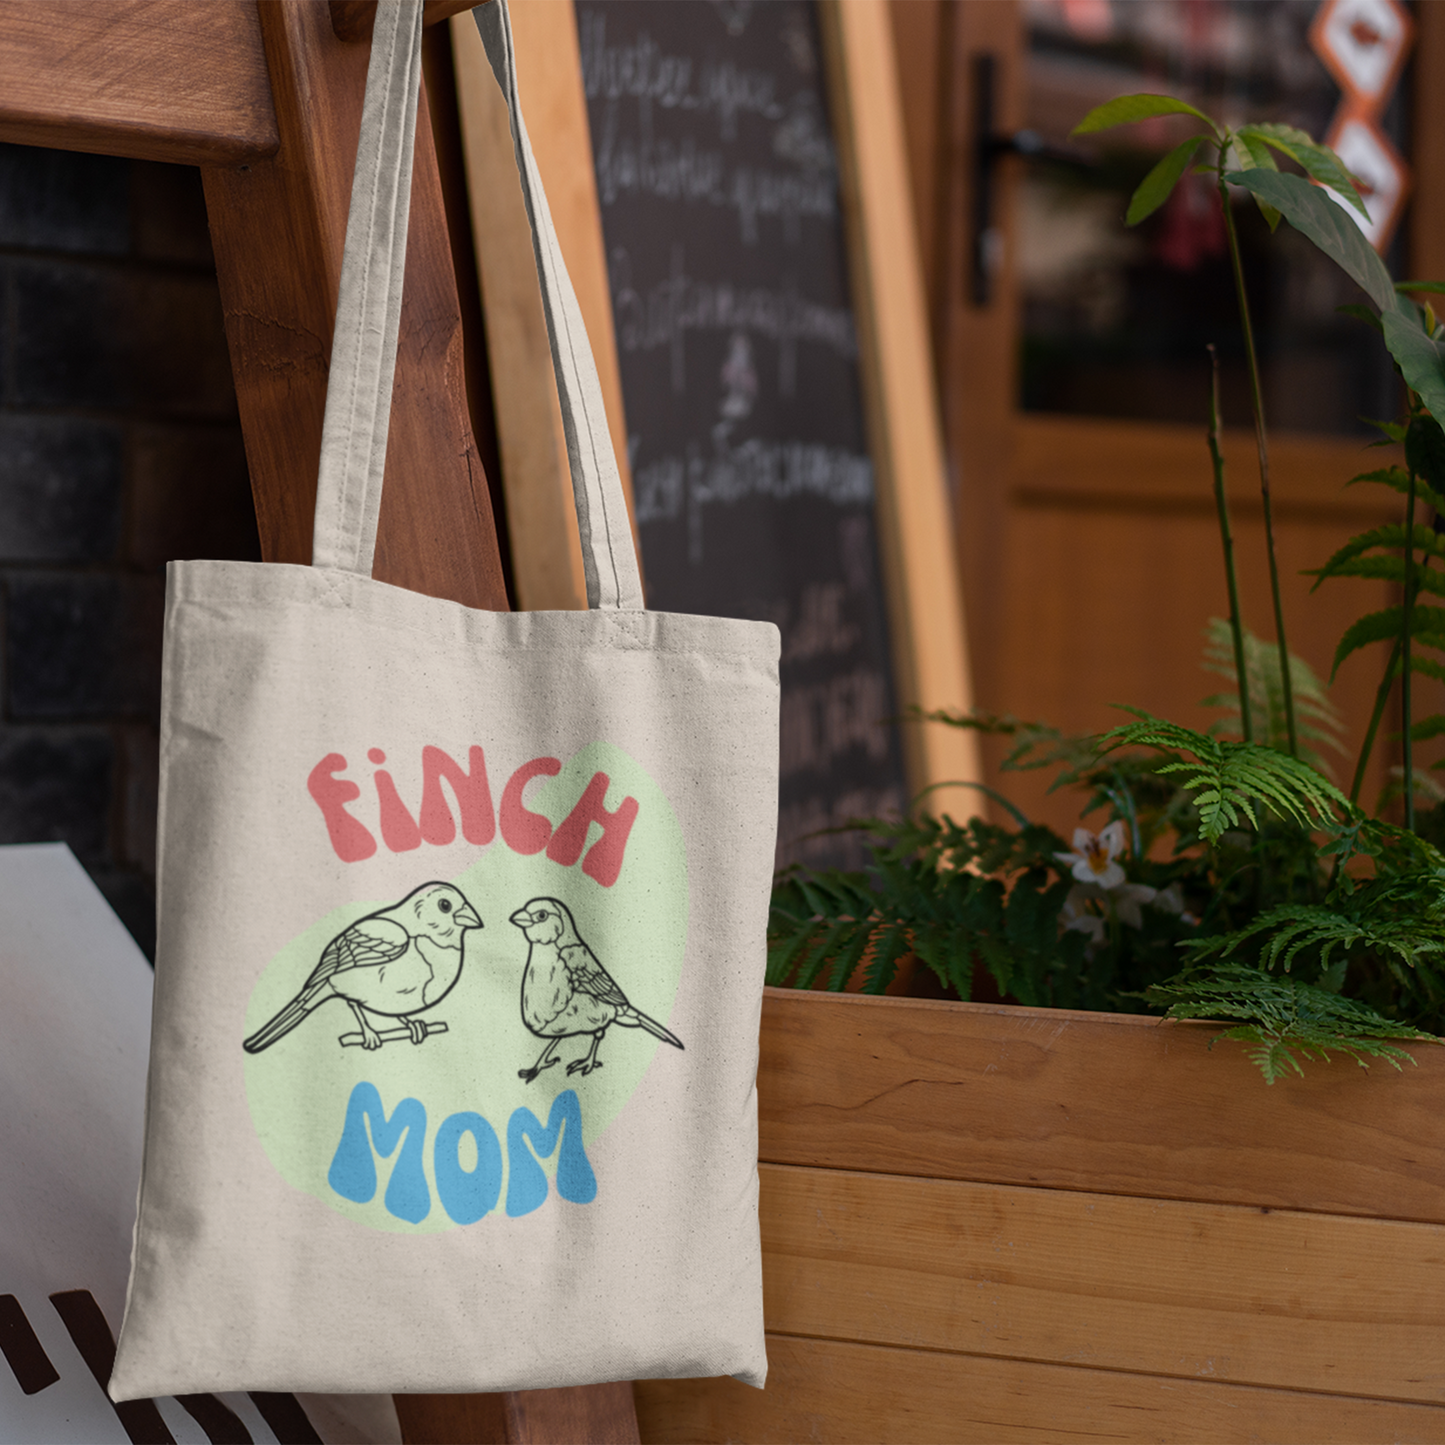 Finch Mom Canvas Tote Bag